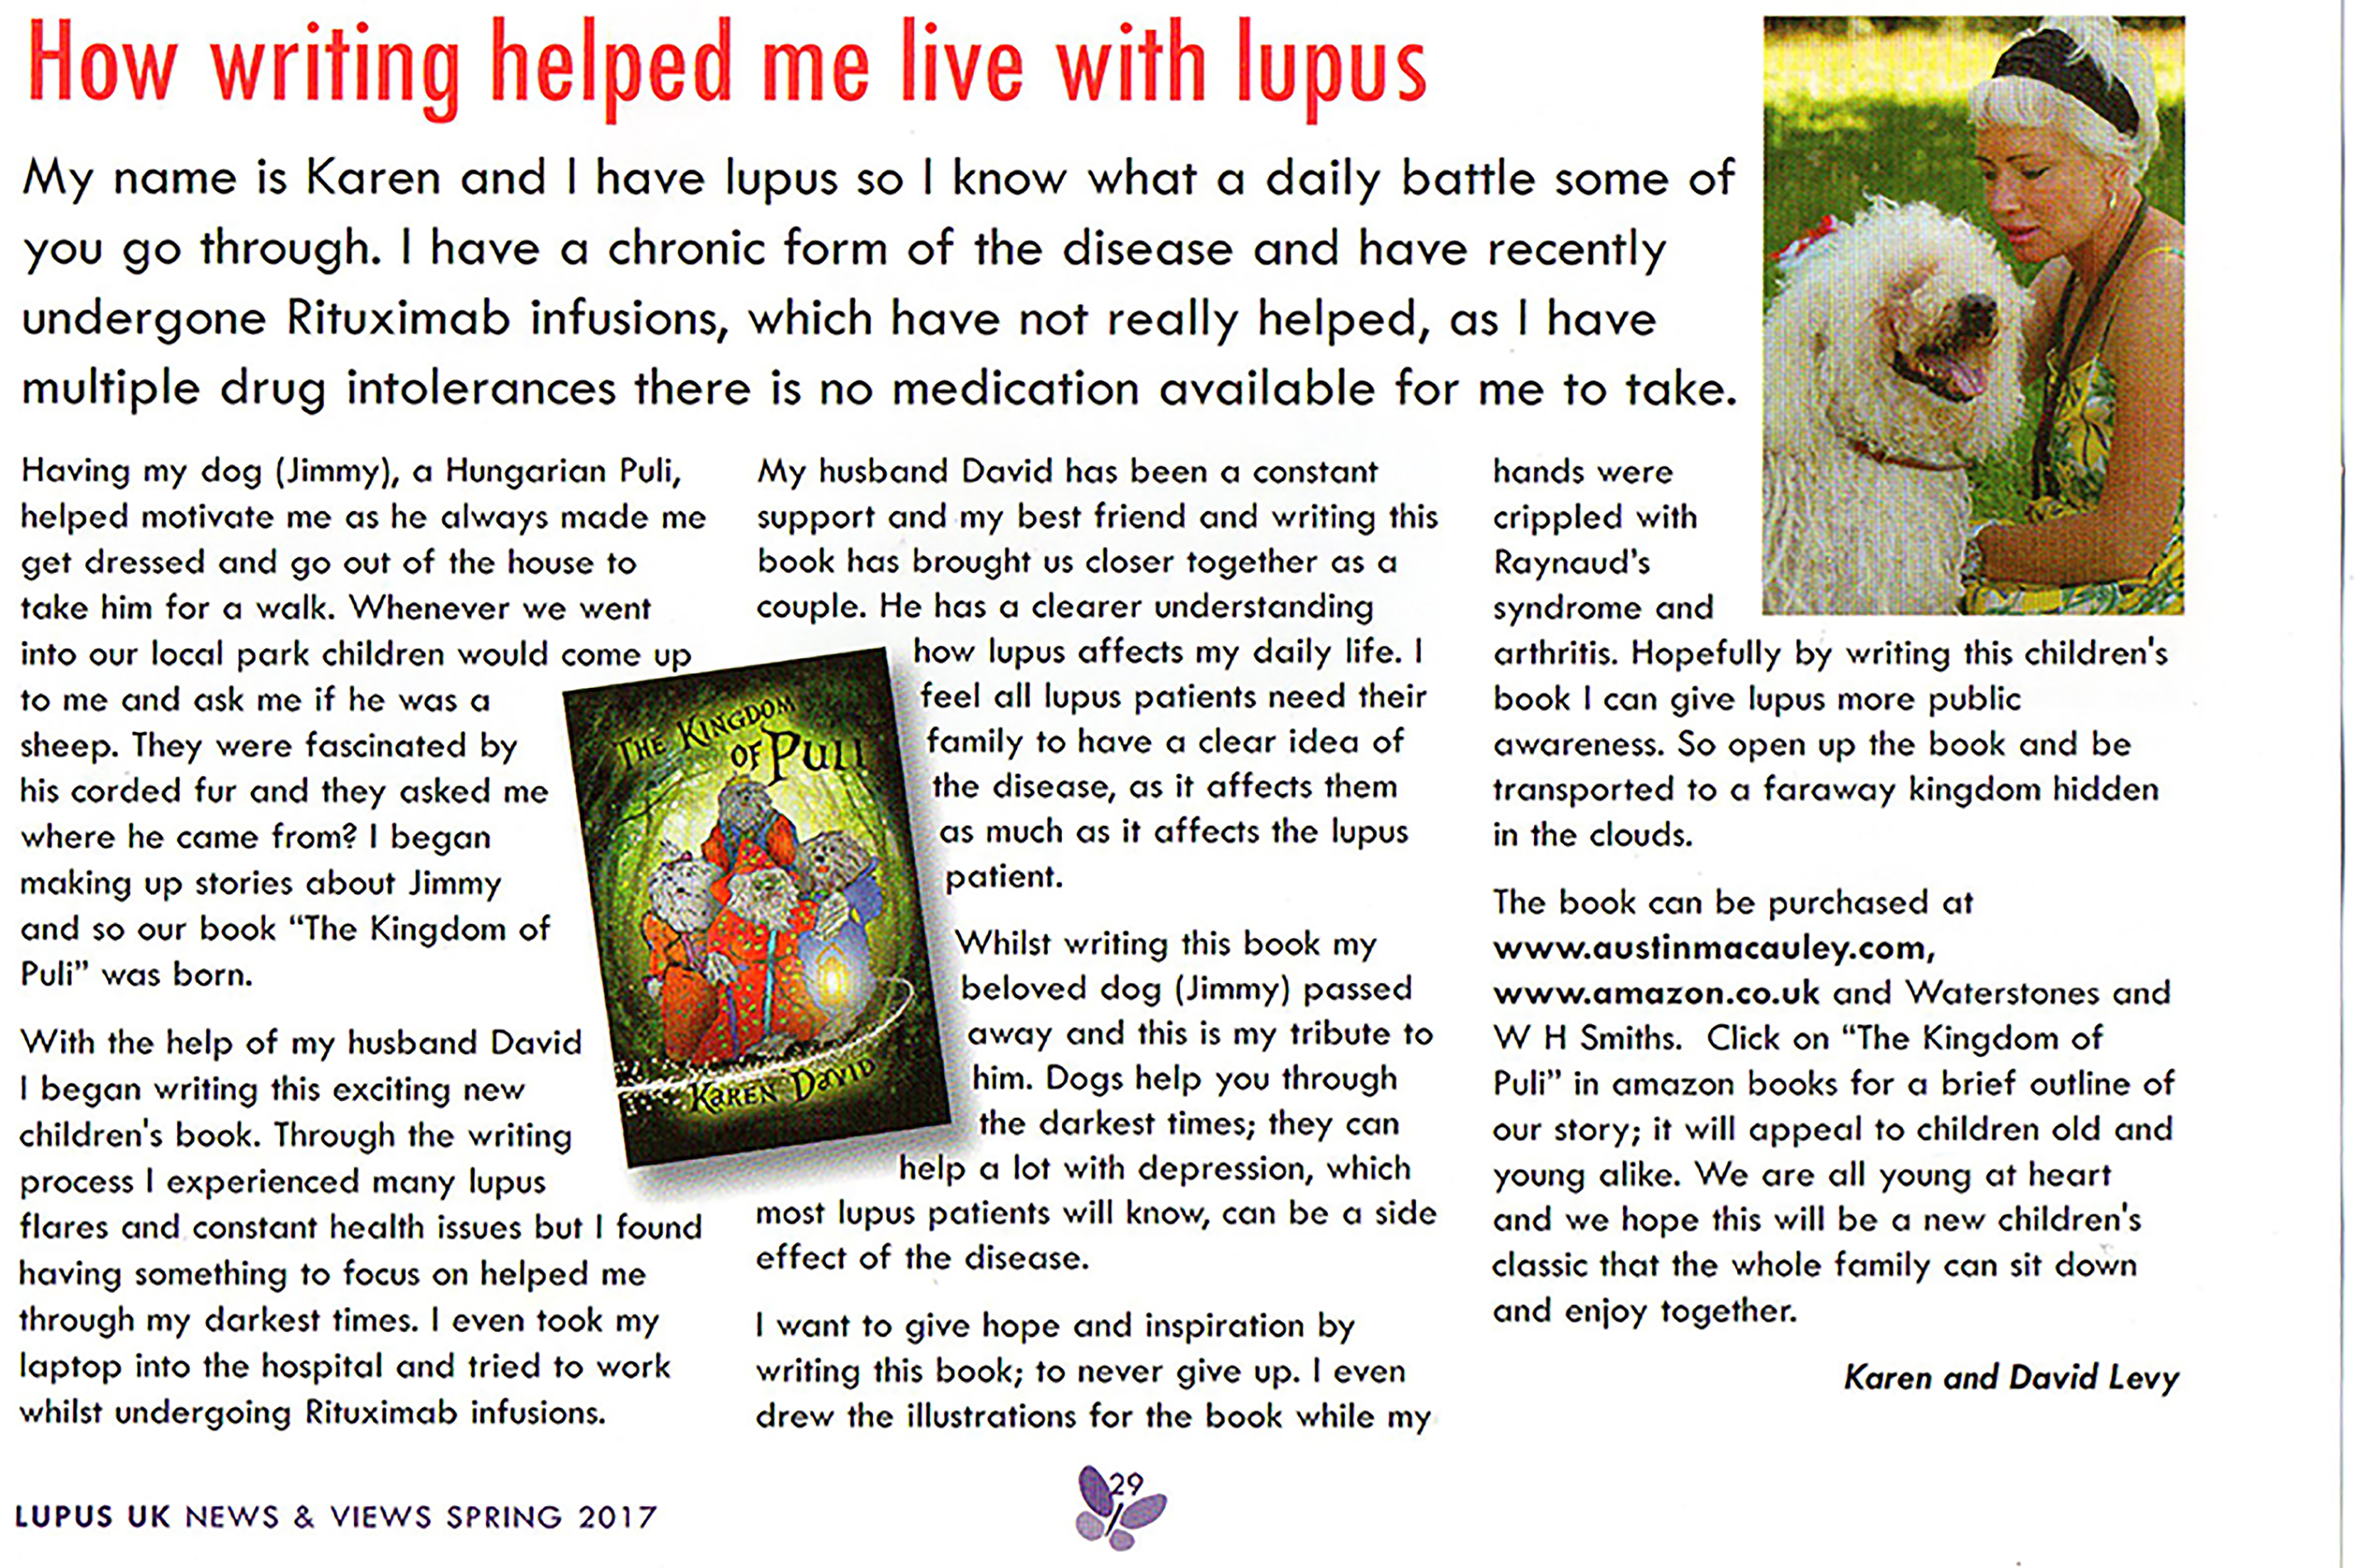 Lupus UK Features Karen David: 'How Writing Helped Me Live with Lupus' 